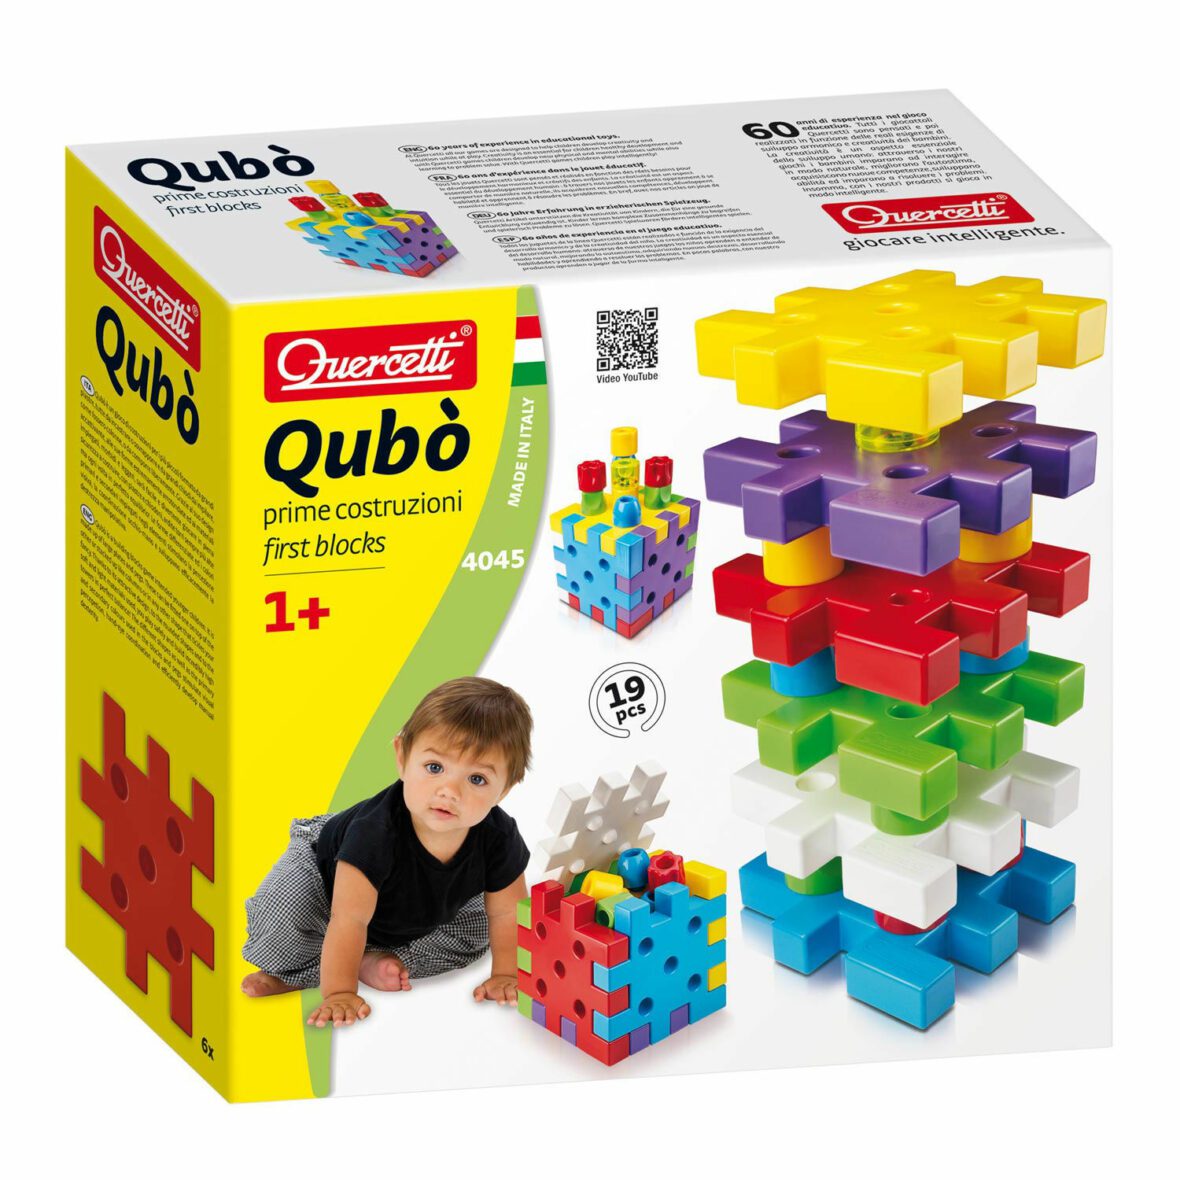 Qubo first blocks – Quercetti